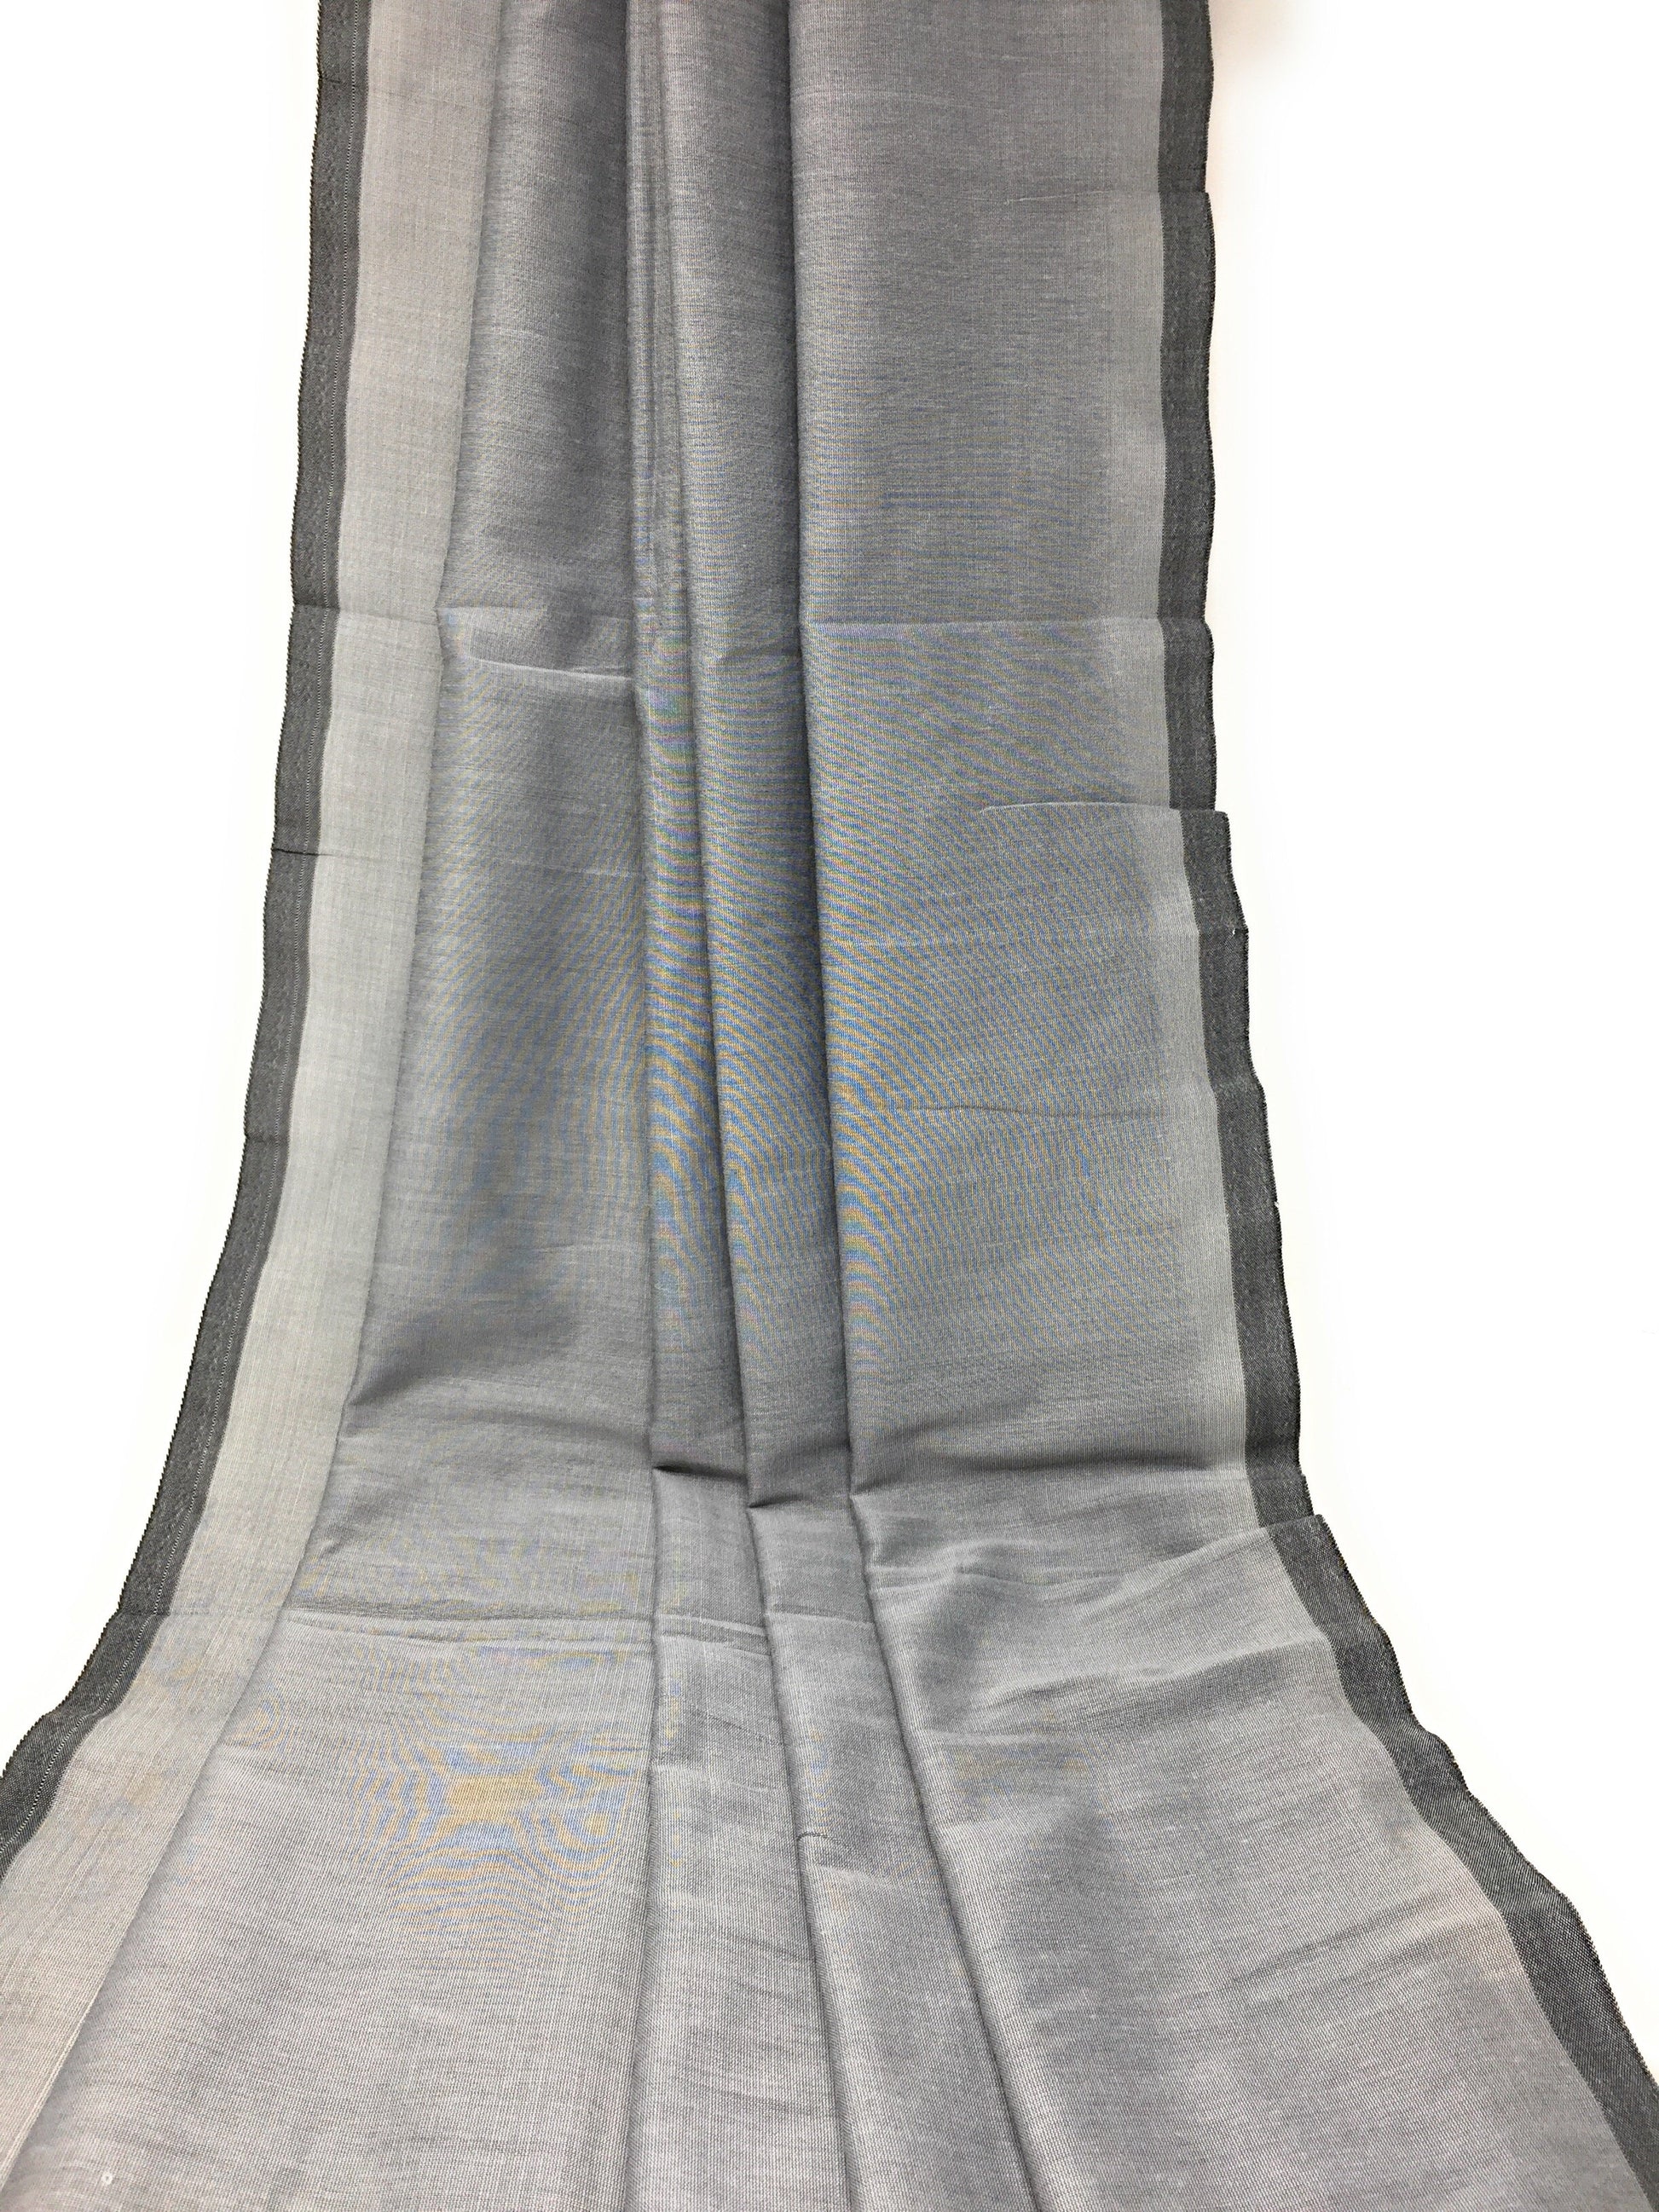 Grey Cotton Silk Dress Material